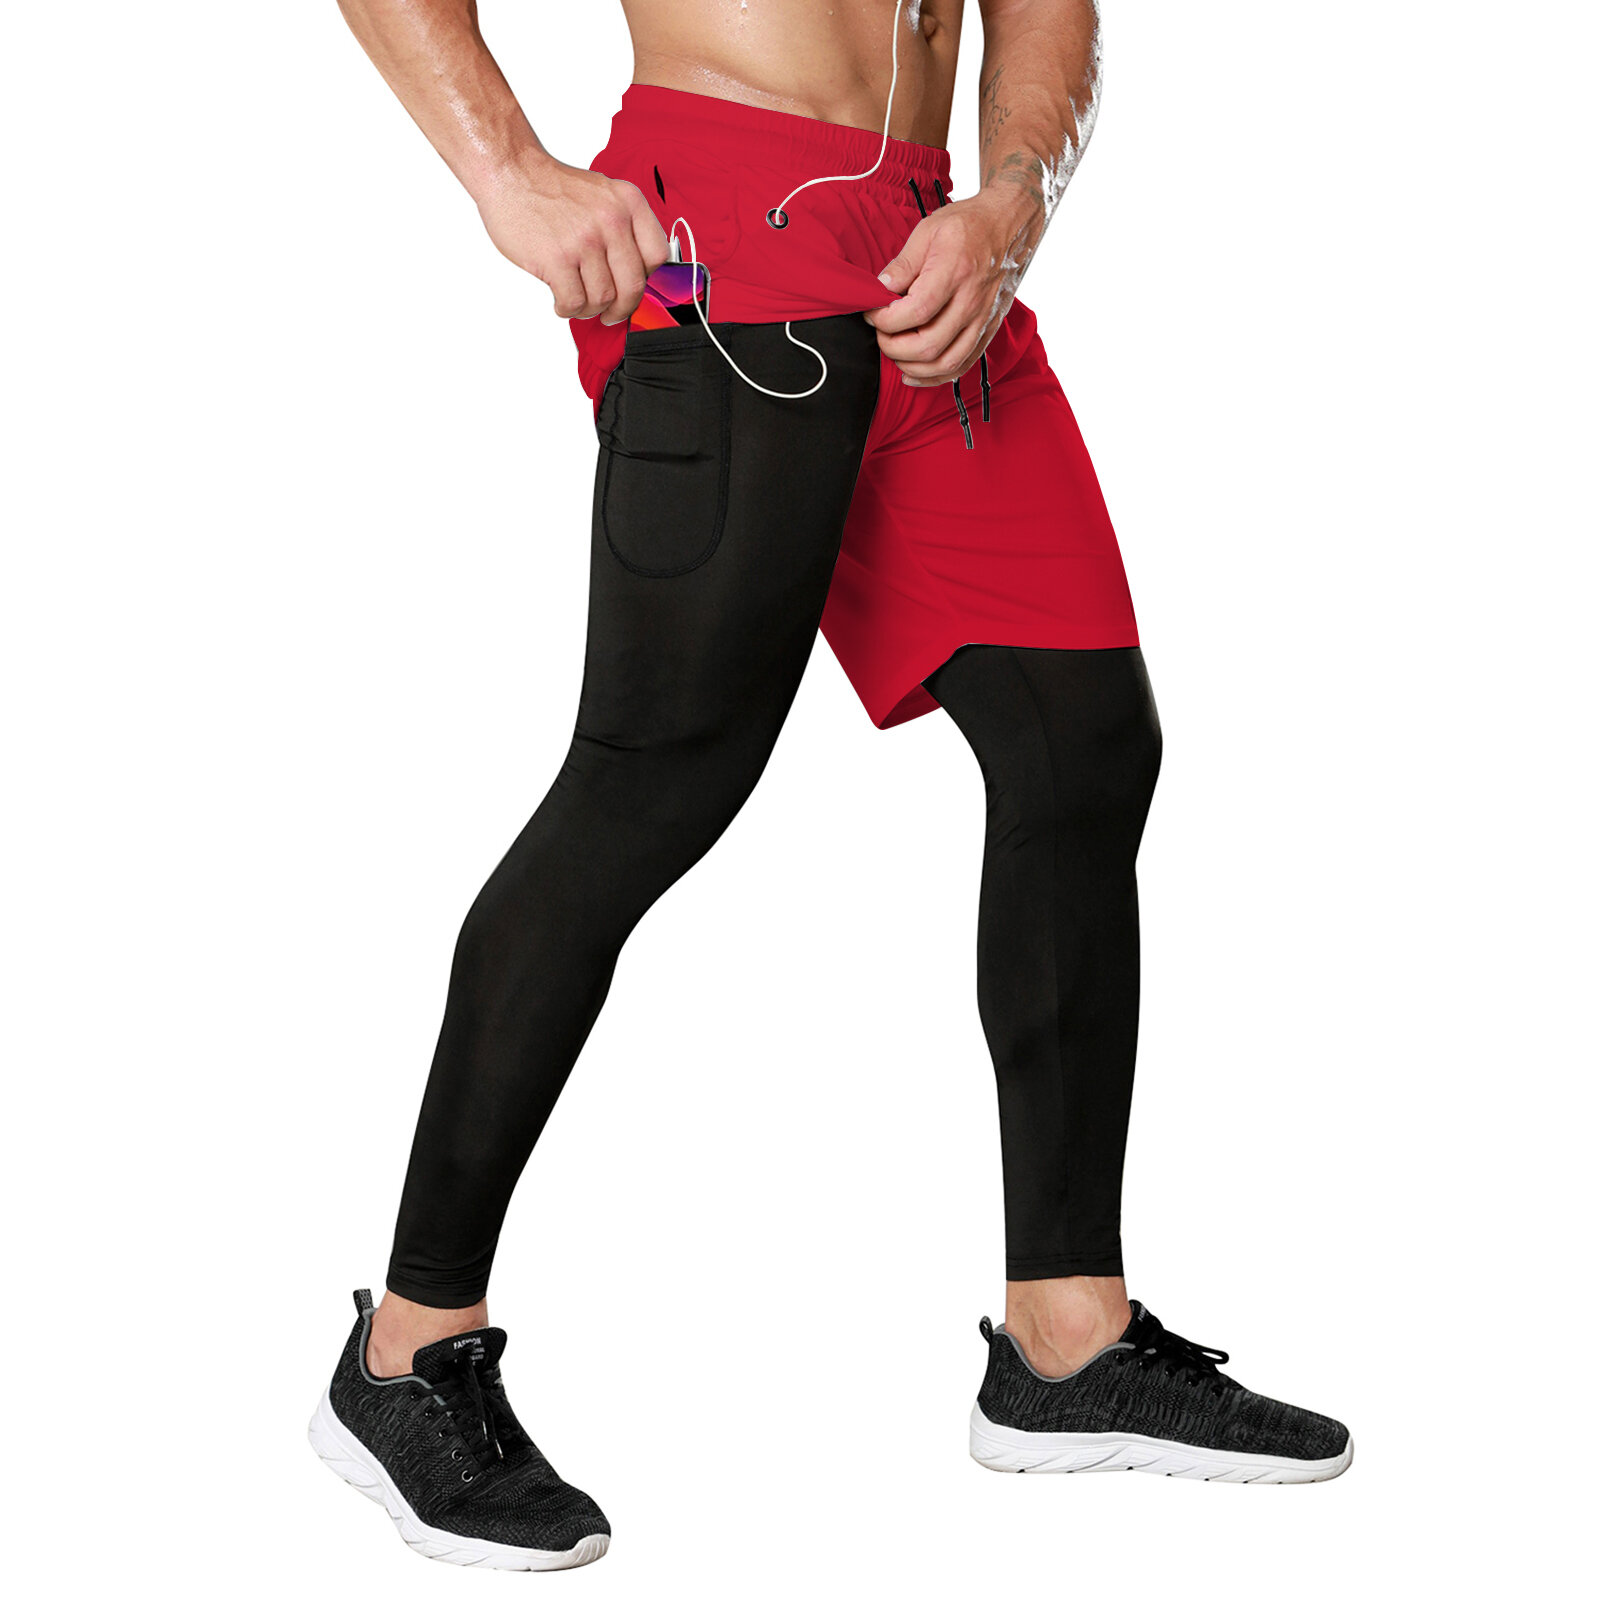 index finger Key Correction red and black gym leggings shake Perversion  fluent